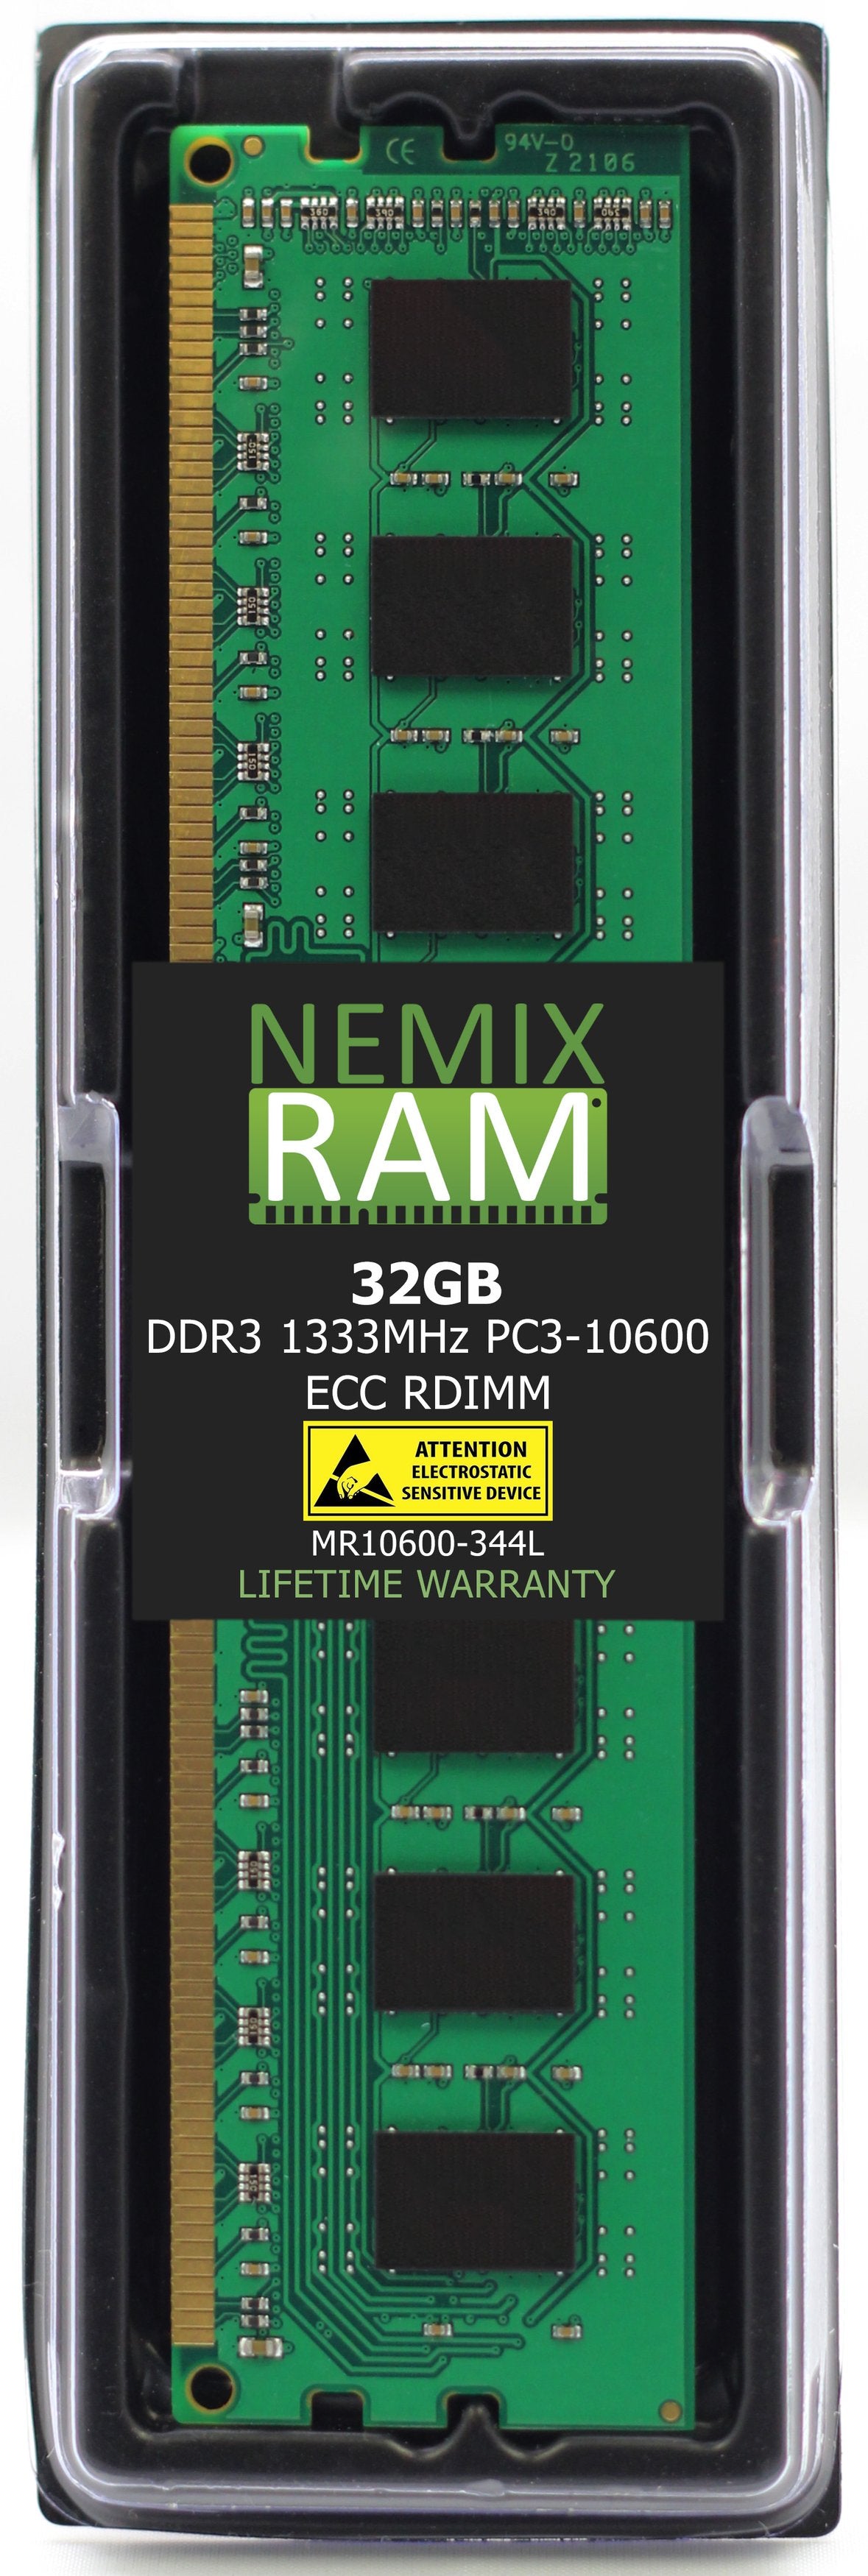 32GB DDR3 1333MHZ PC3-10600 RDIMM Compatible with Supermicro MEM-DR332L-SL01-ER13